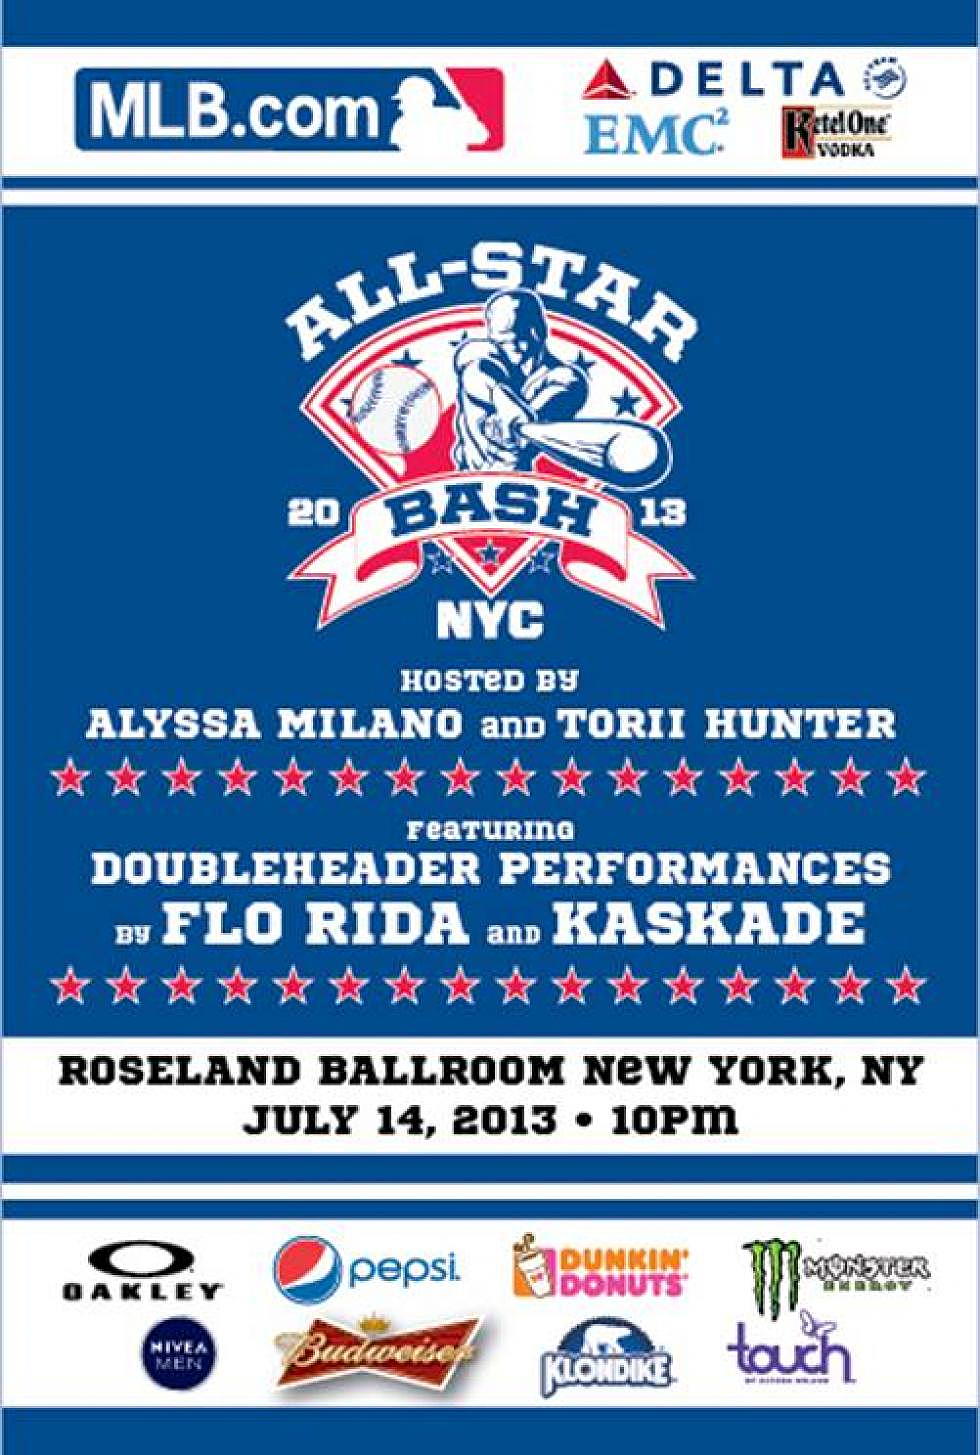 Kaskade to perform at MLB.com&#8217;s All-Star Bash at Roseland Ballroom in NYC tonight